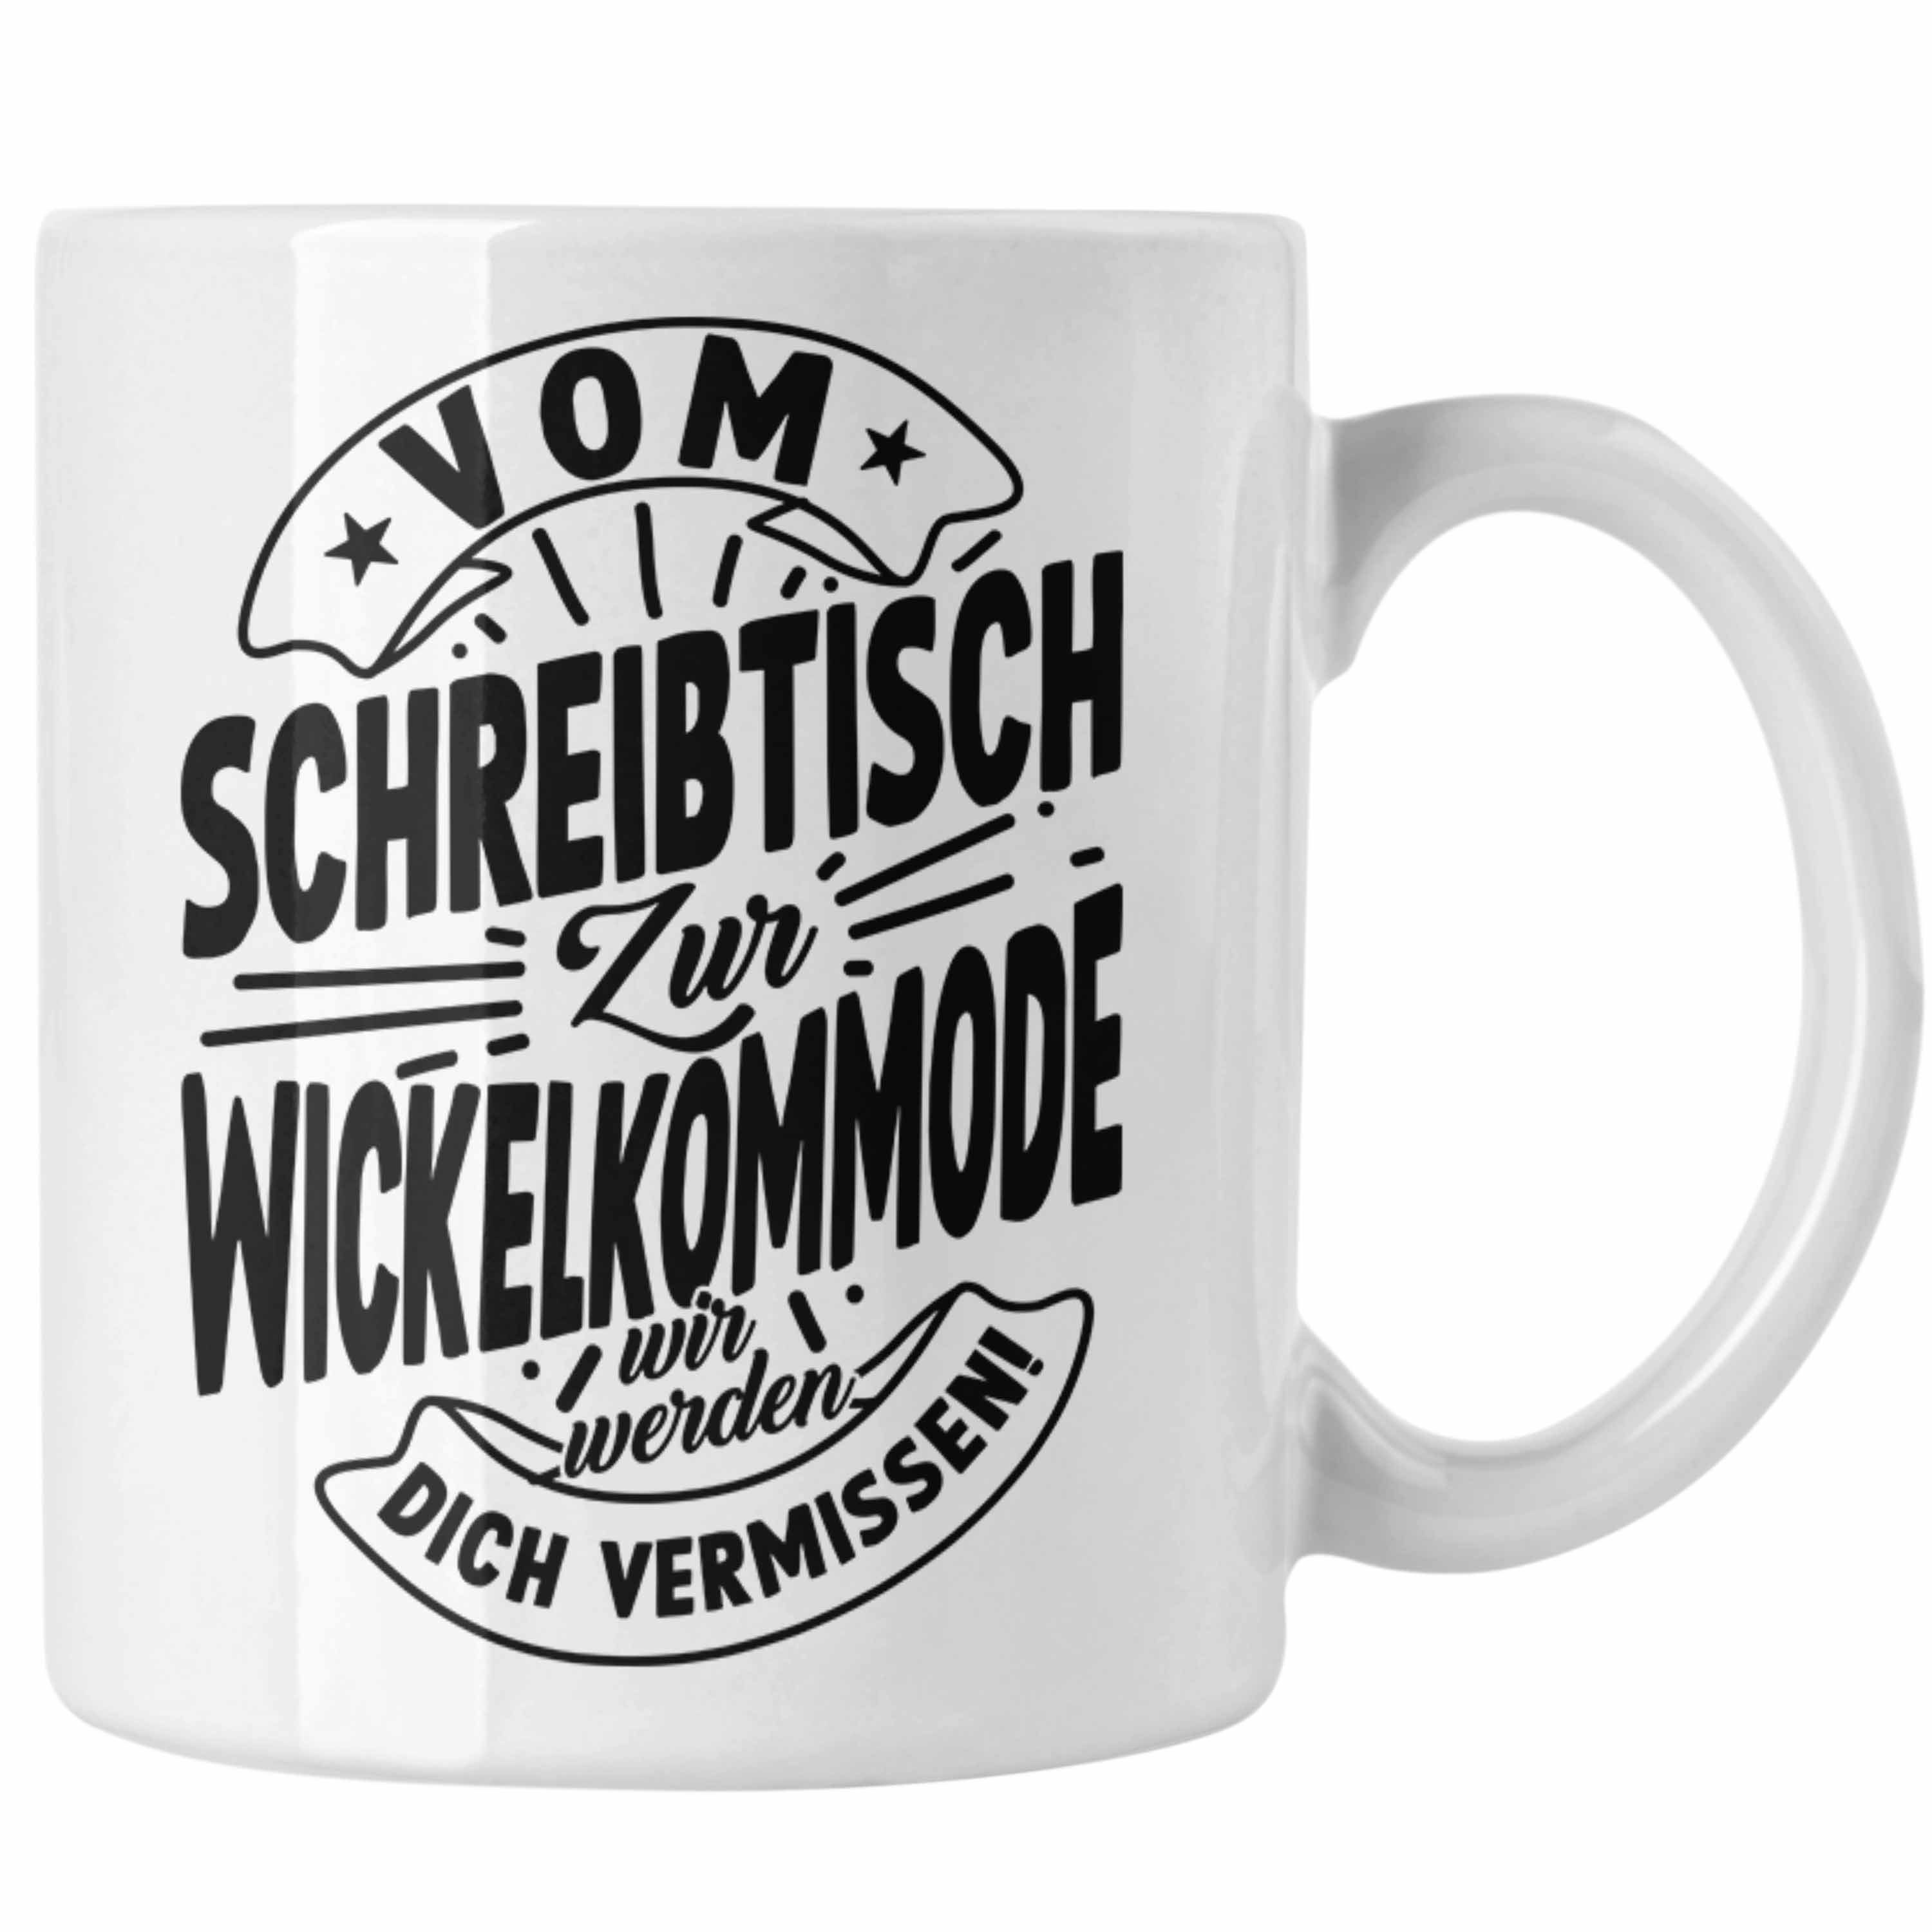 Trendation Kollegi Abschied Weiss Mutterschutz Tasse Mutterschutz Tasse Kaffeetasse Geschenk